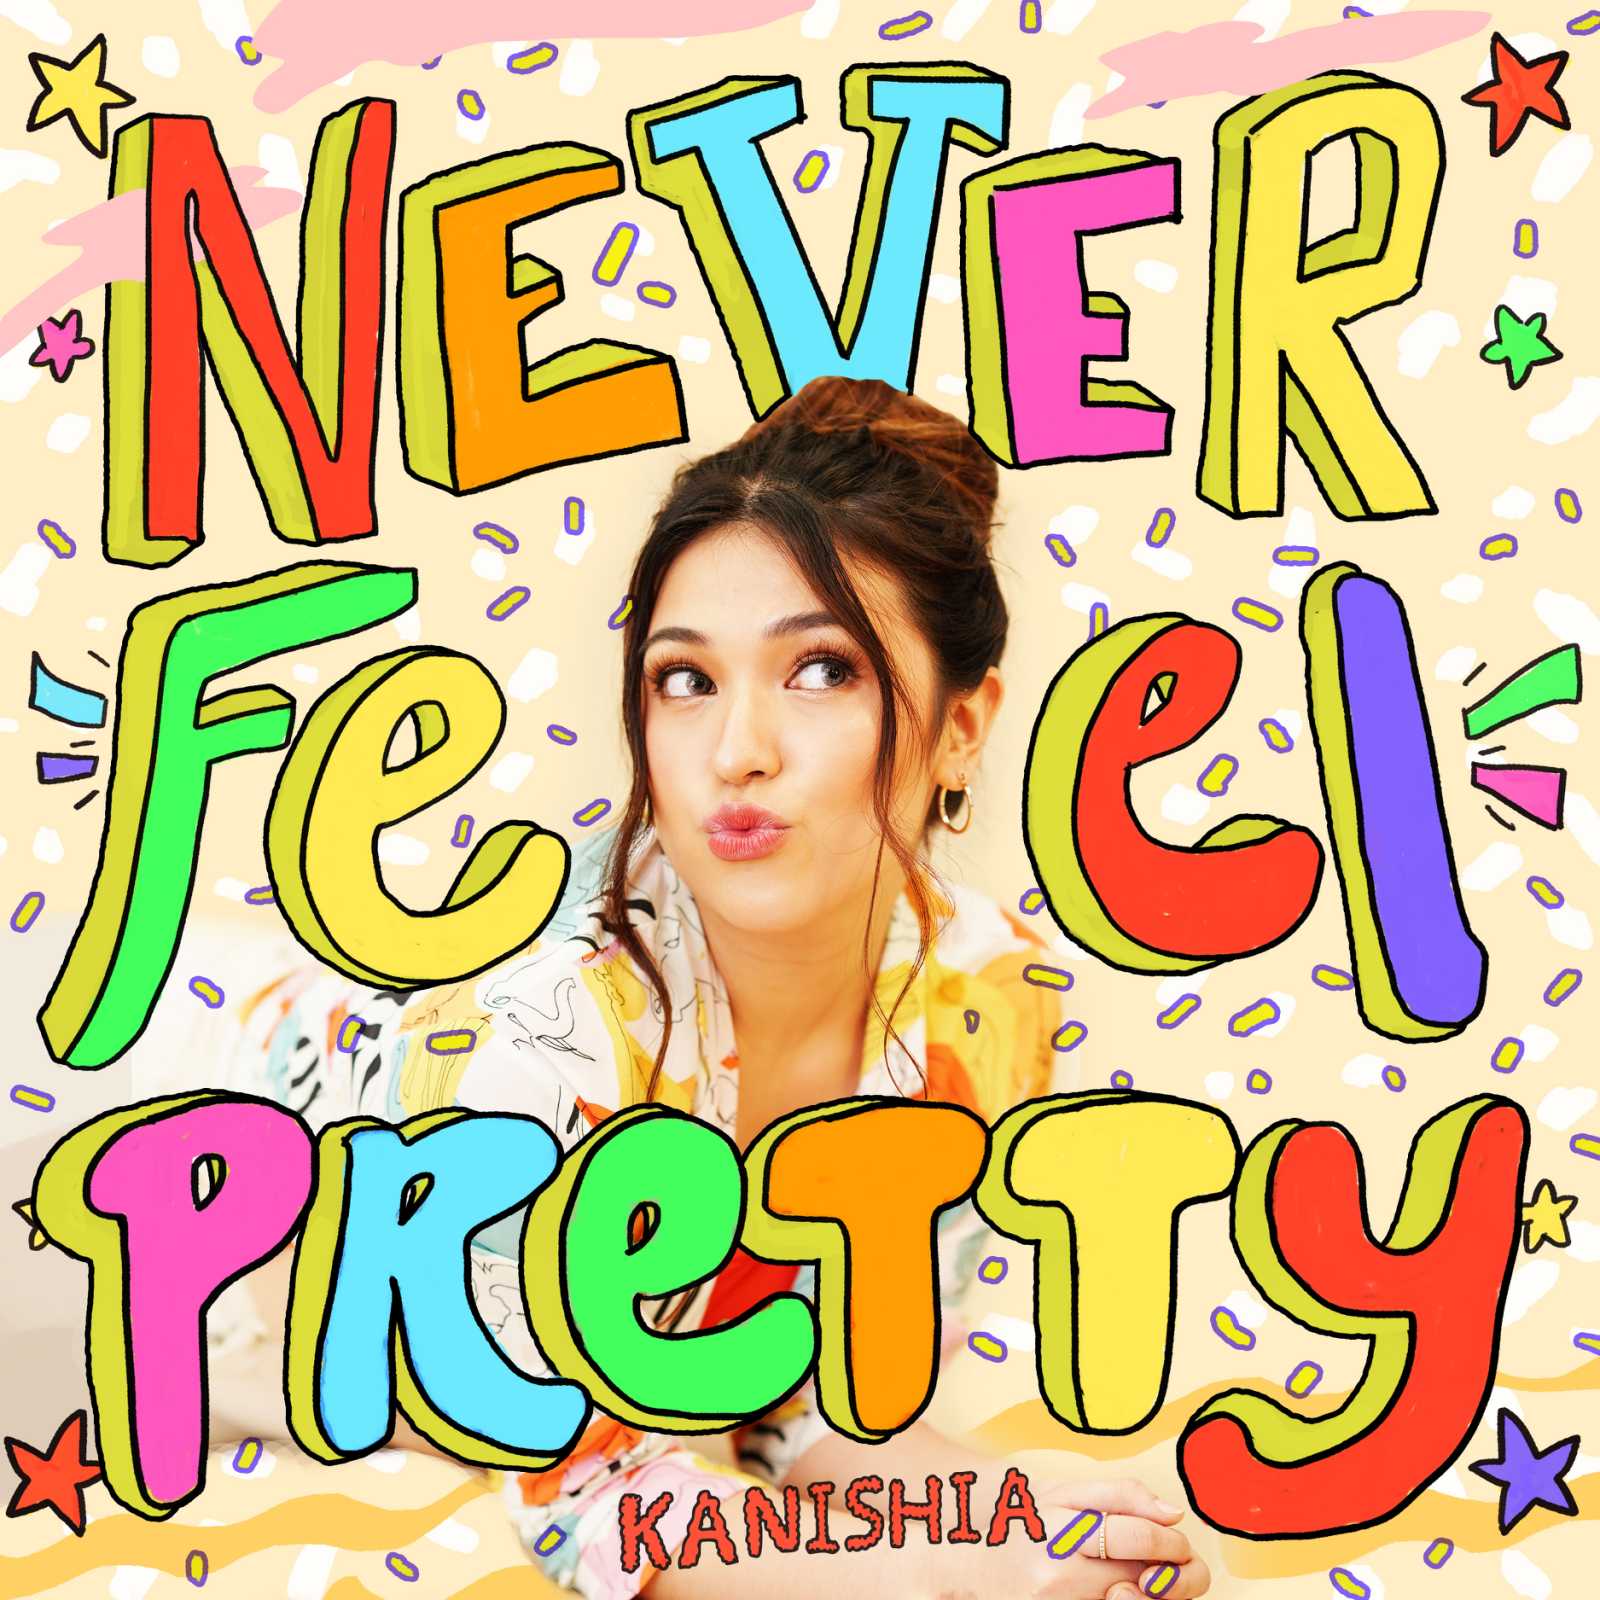 Never Feel Pretty by Star Pop artist Kanishia